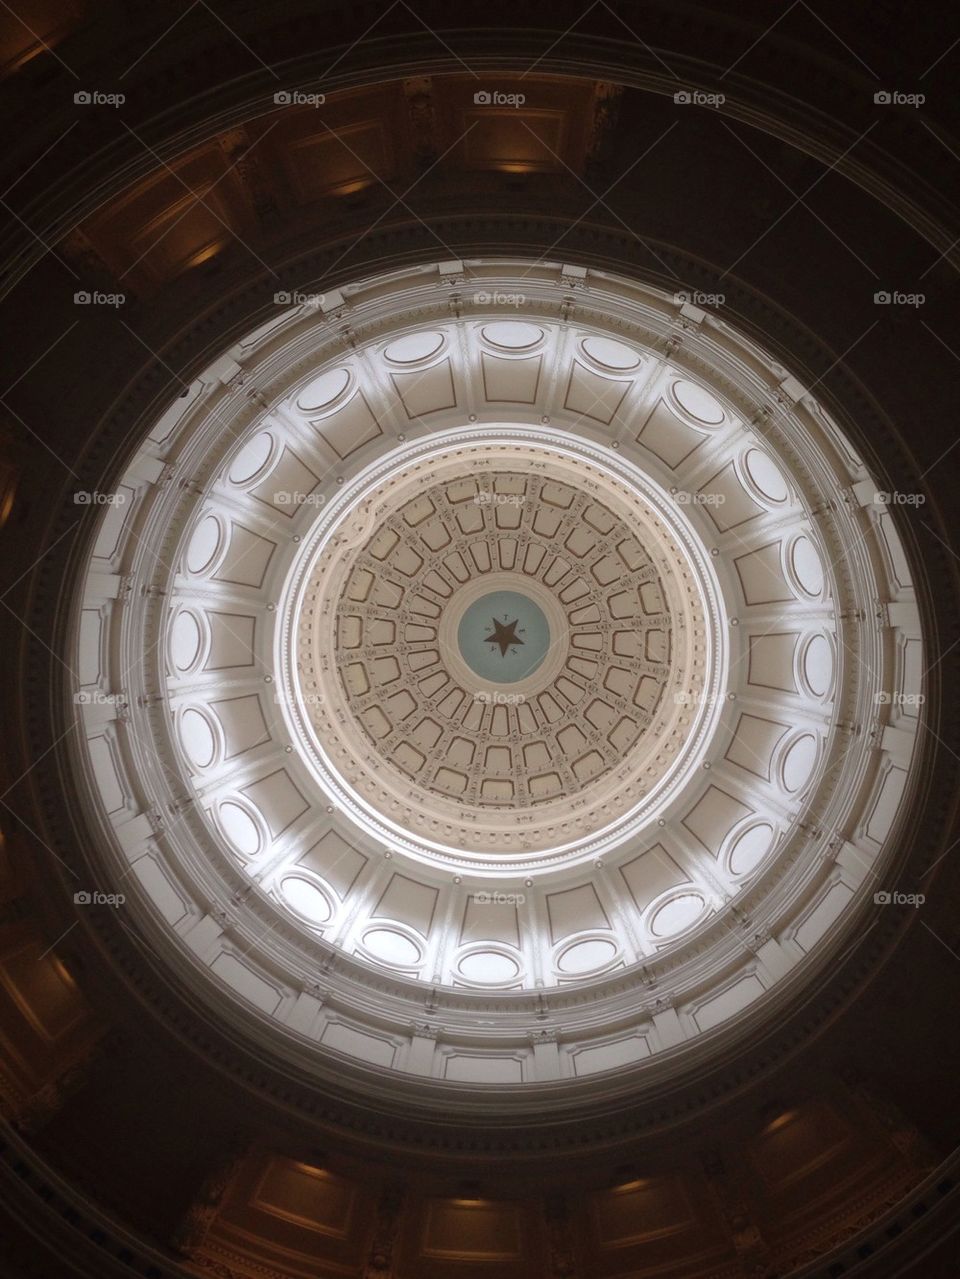 Texas state capital